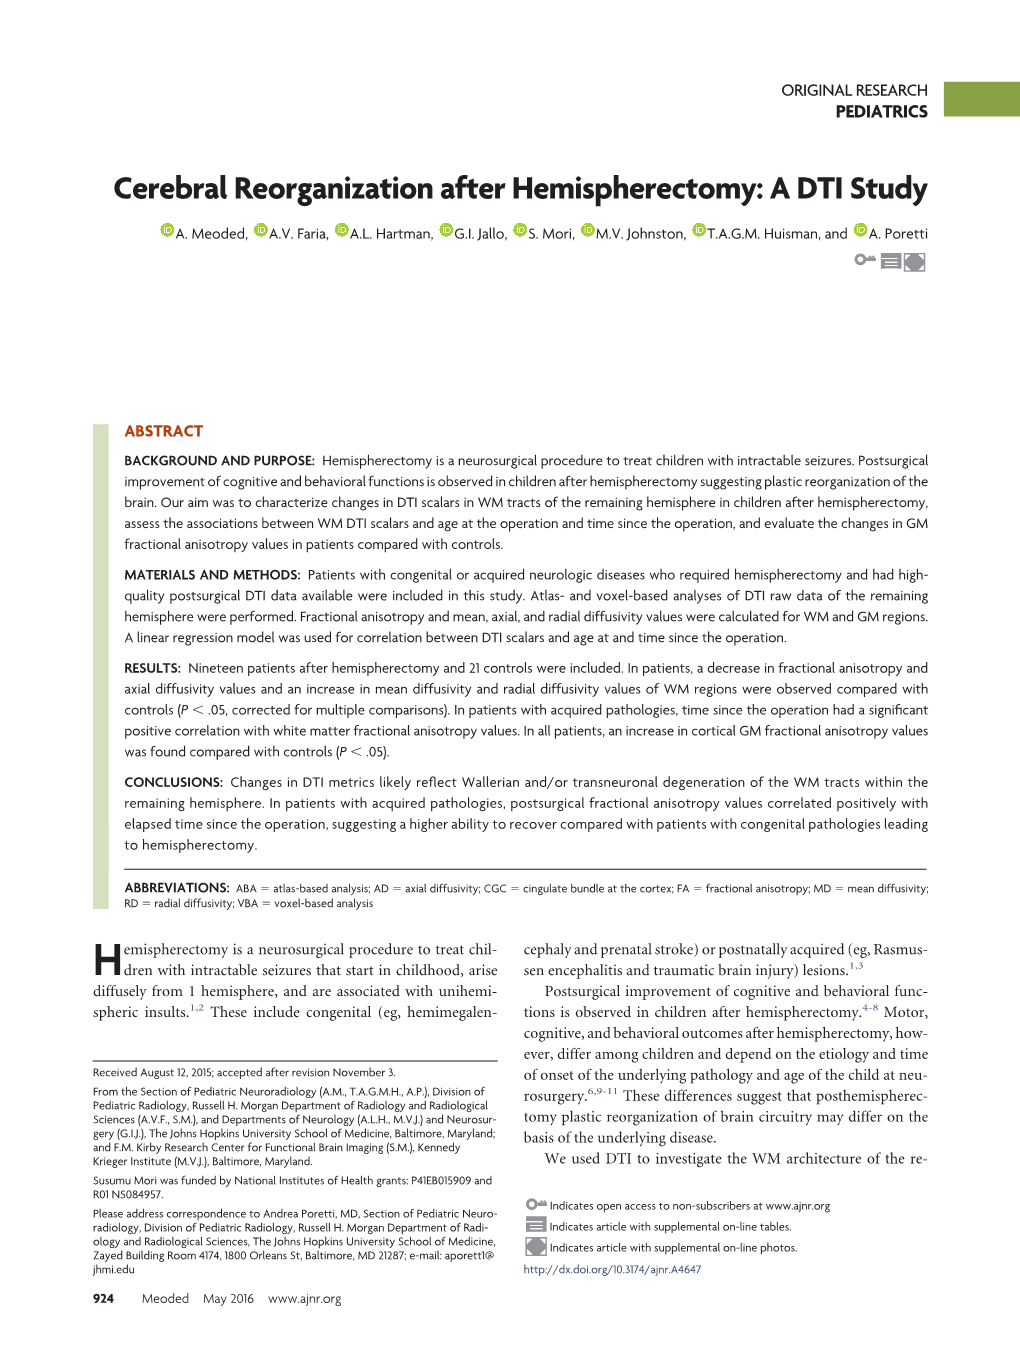 Cerebral Reorganization After Hemispherectomy: a DTI Study